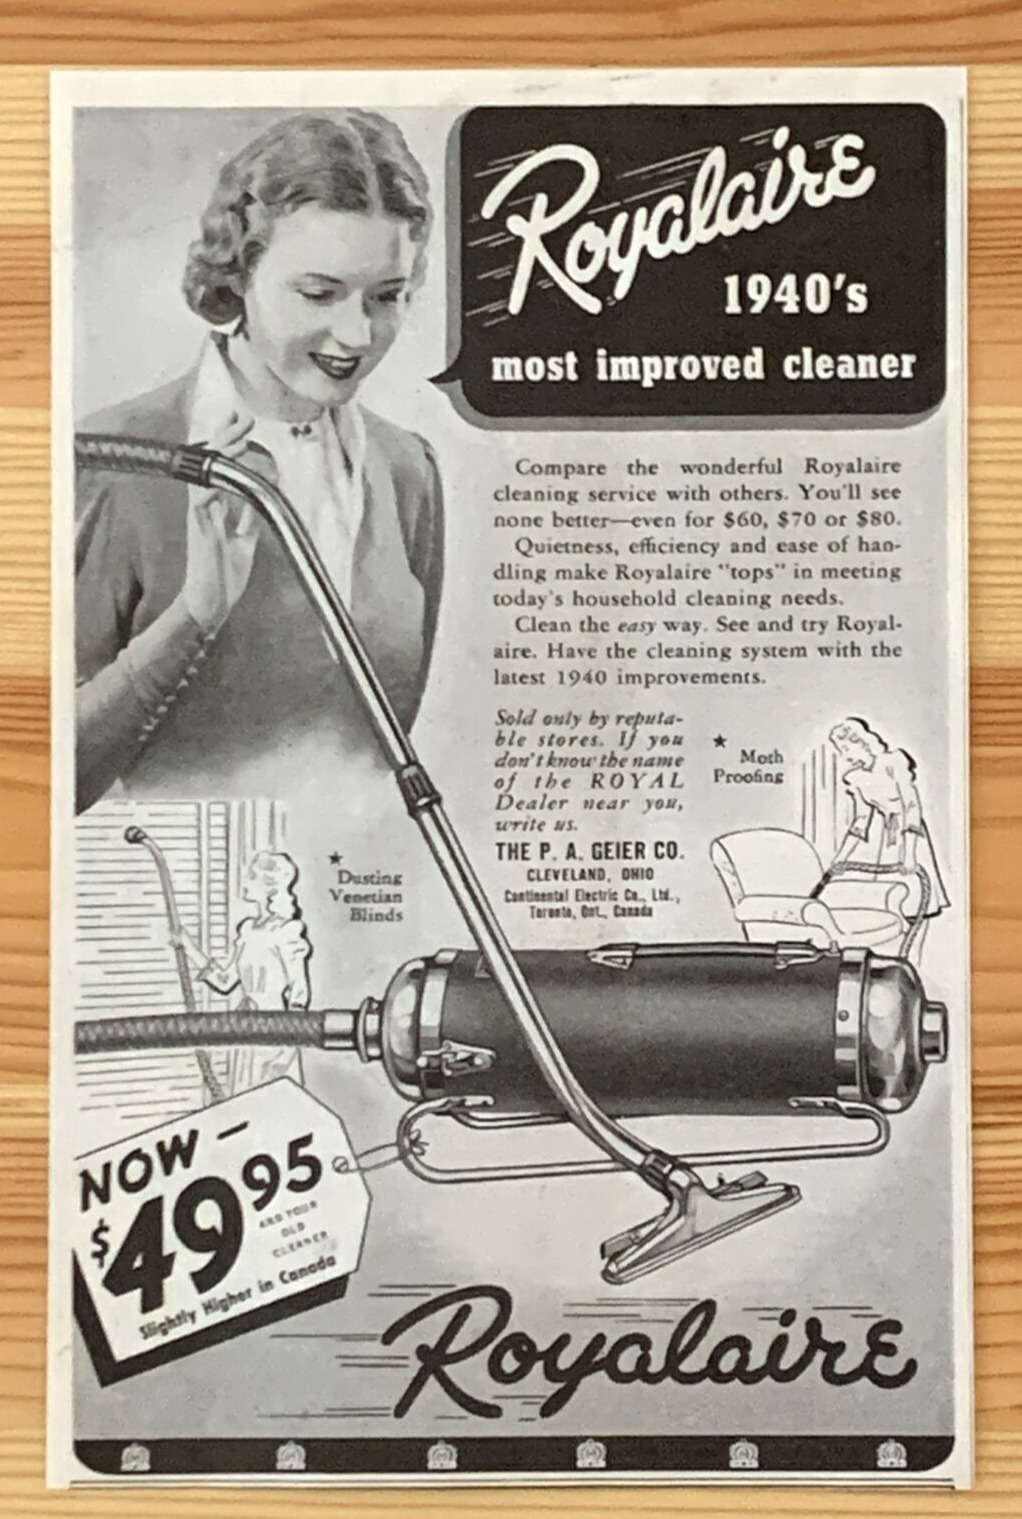 Print Ad Royalaire Vacuum P.A. Geier Co. Cleveland Ohio 1940 #0084